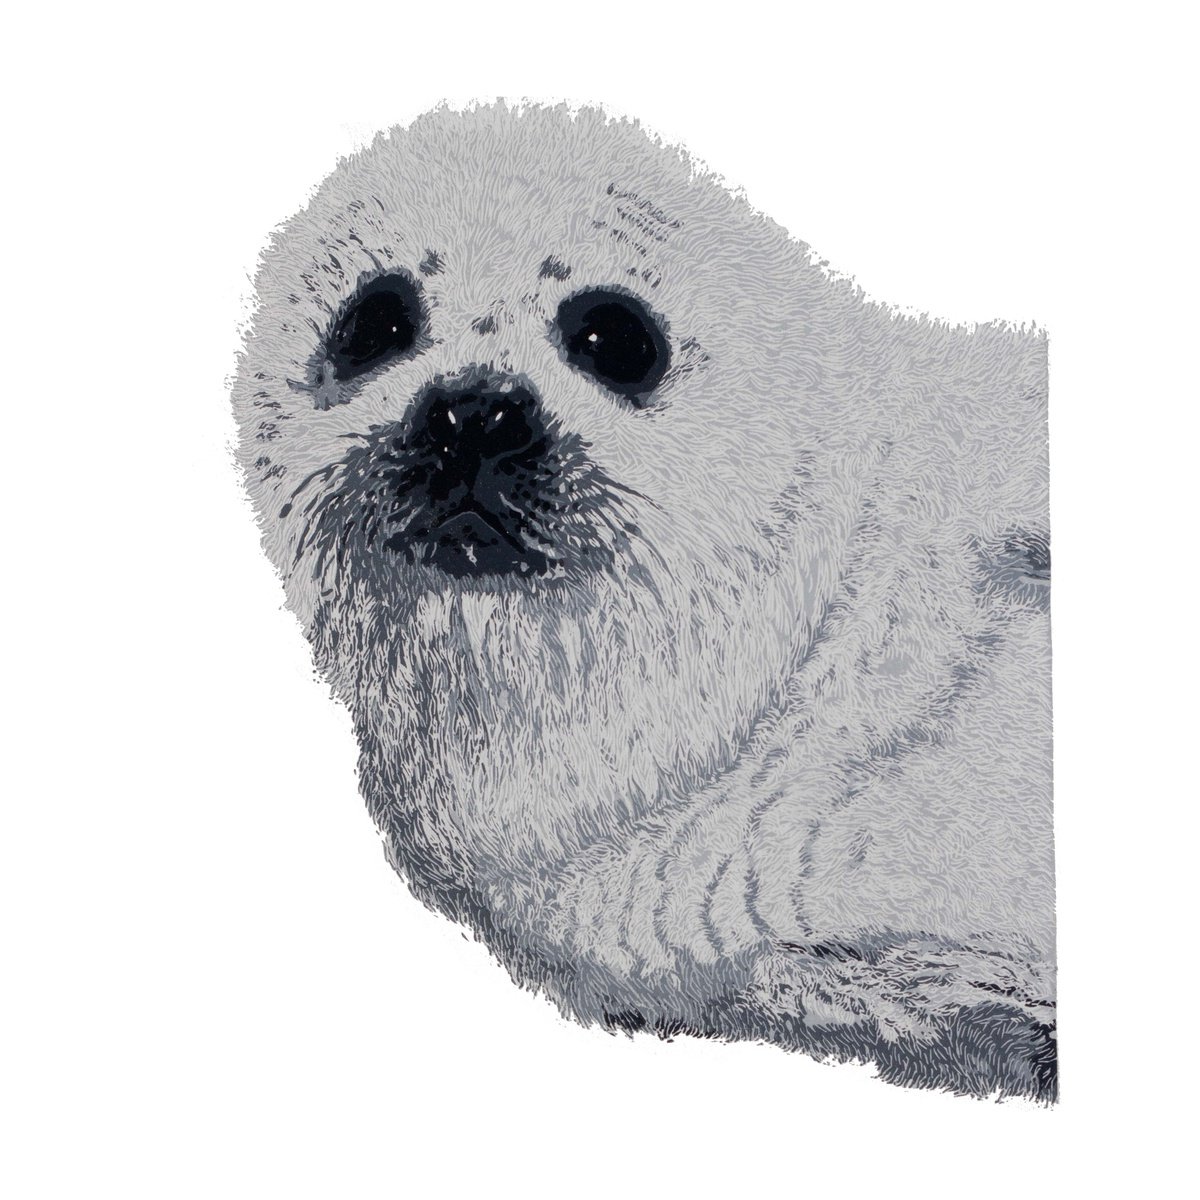 Seal by Wayne Longhurst